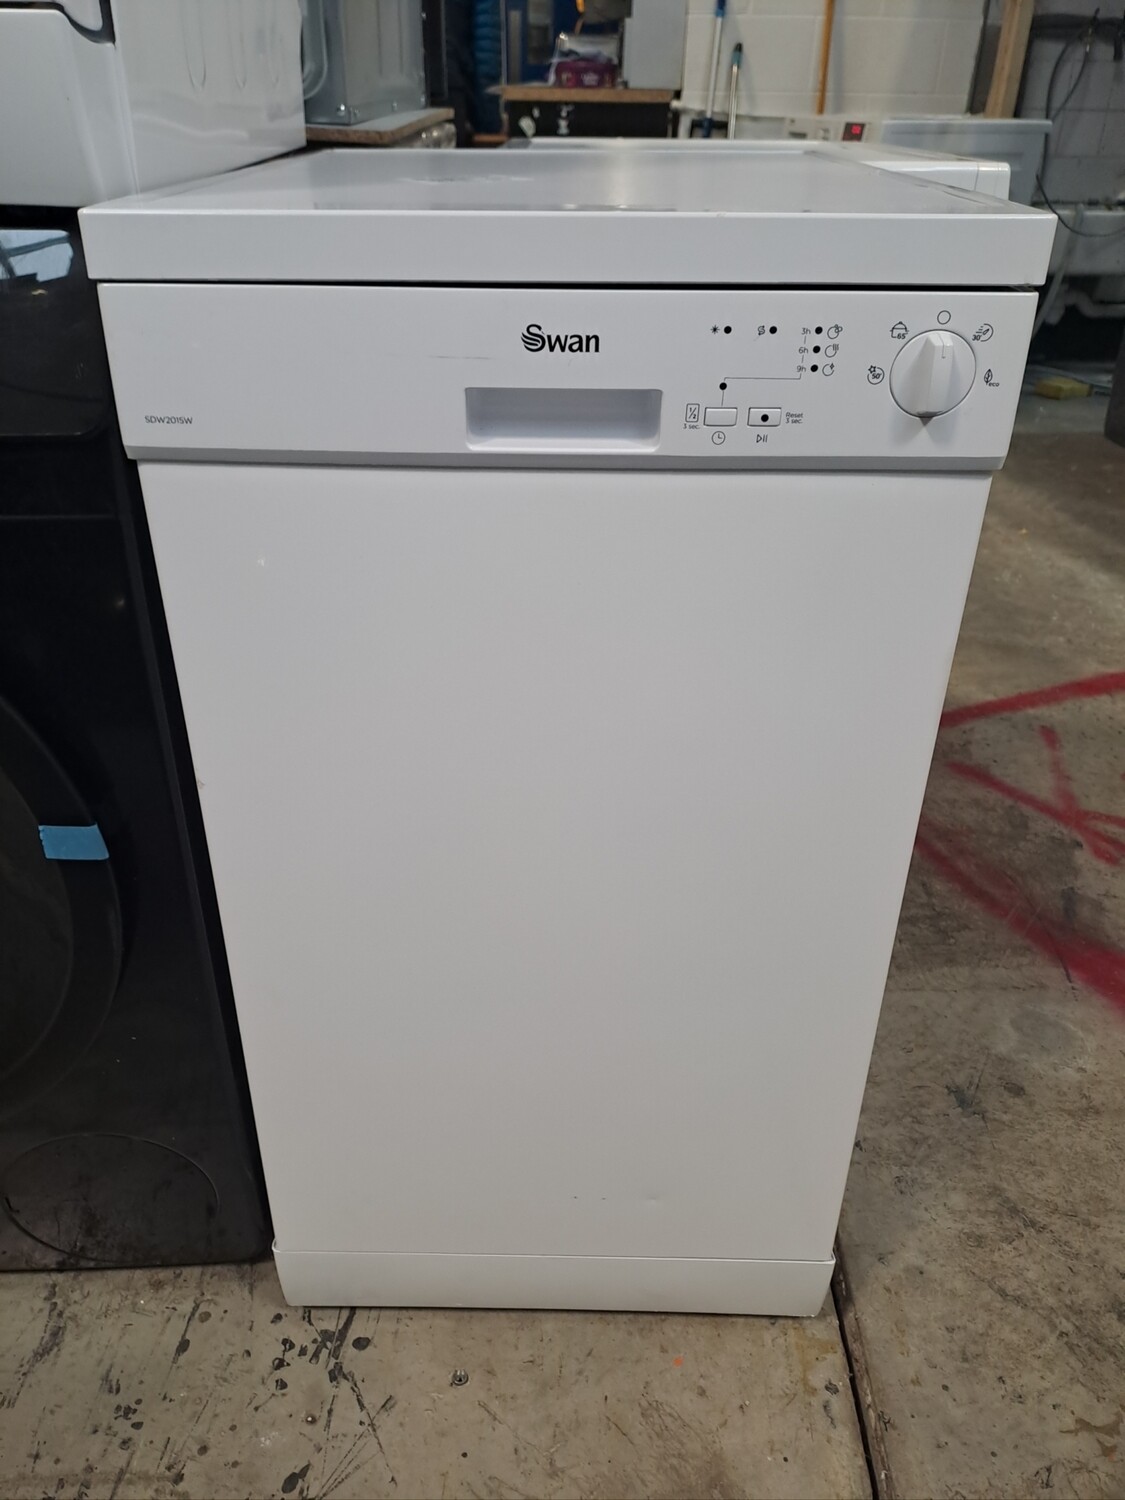 Swan SDW2015W 45cm Freestanding Slimline Dishwasher in White New Graded